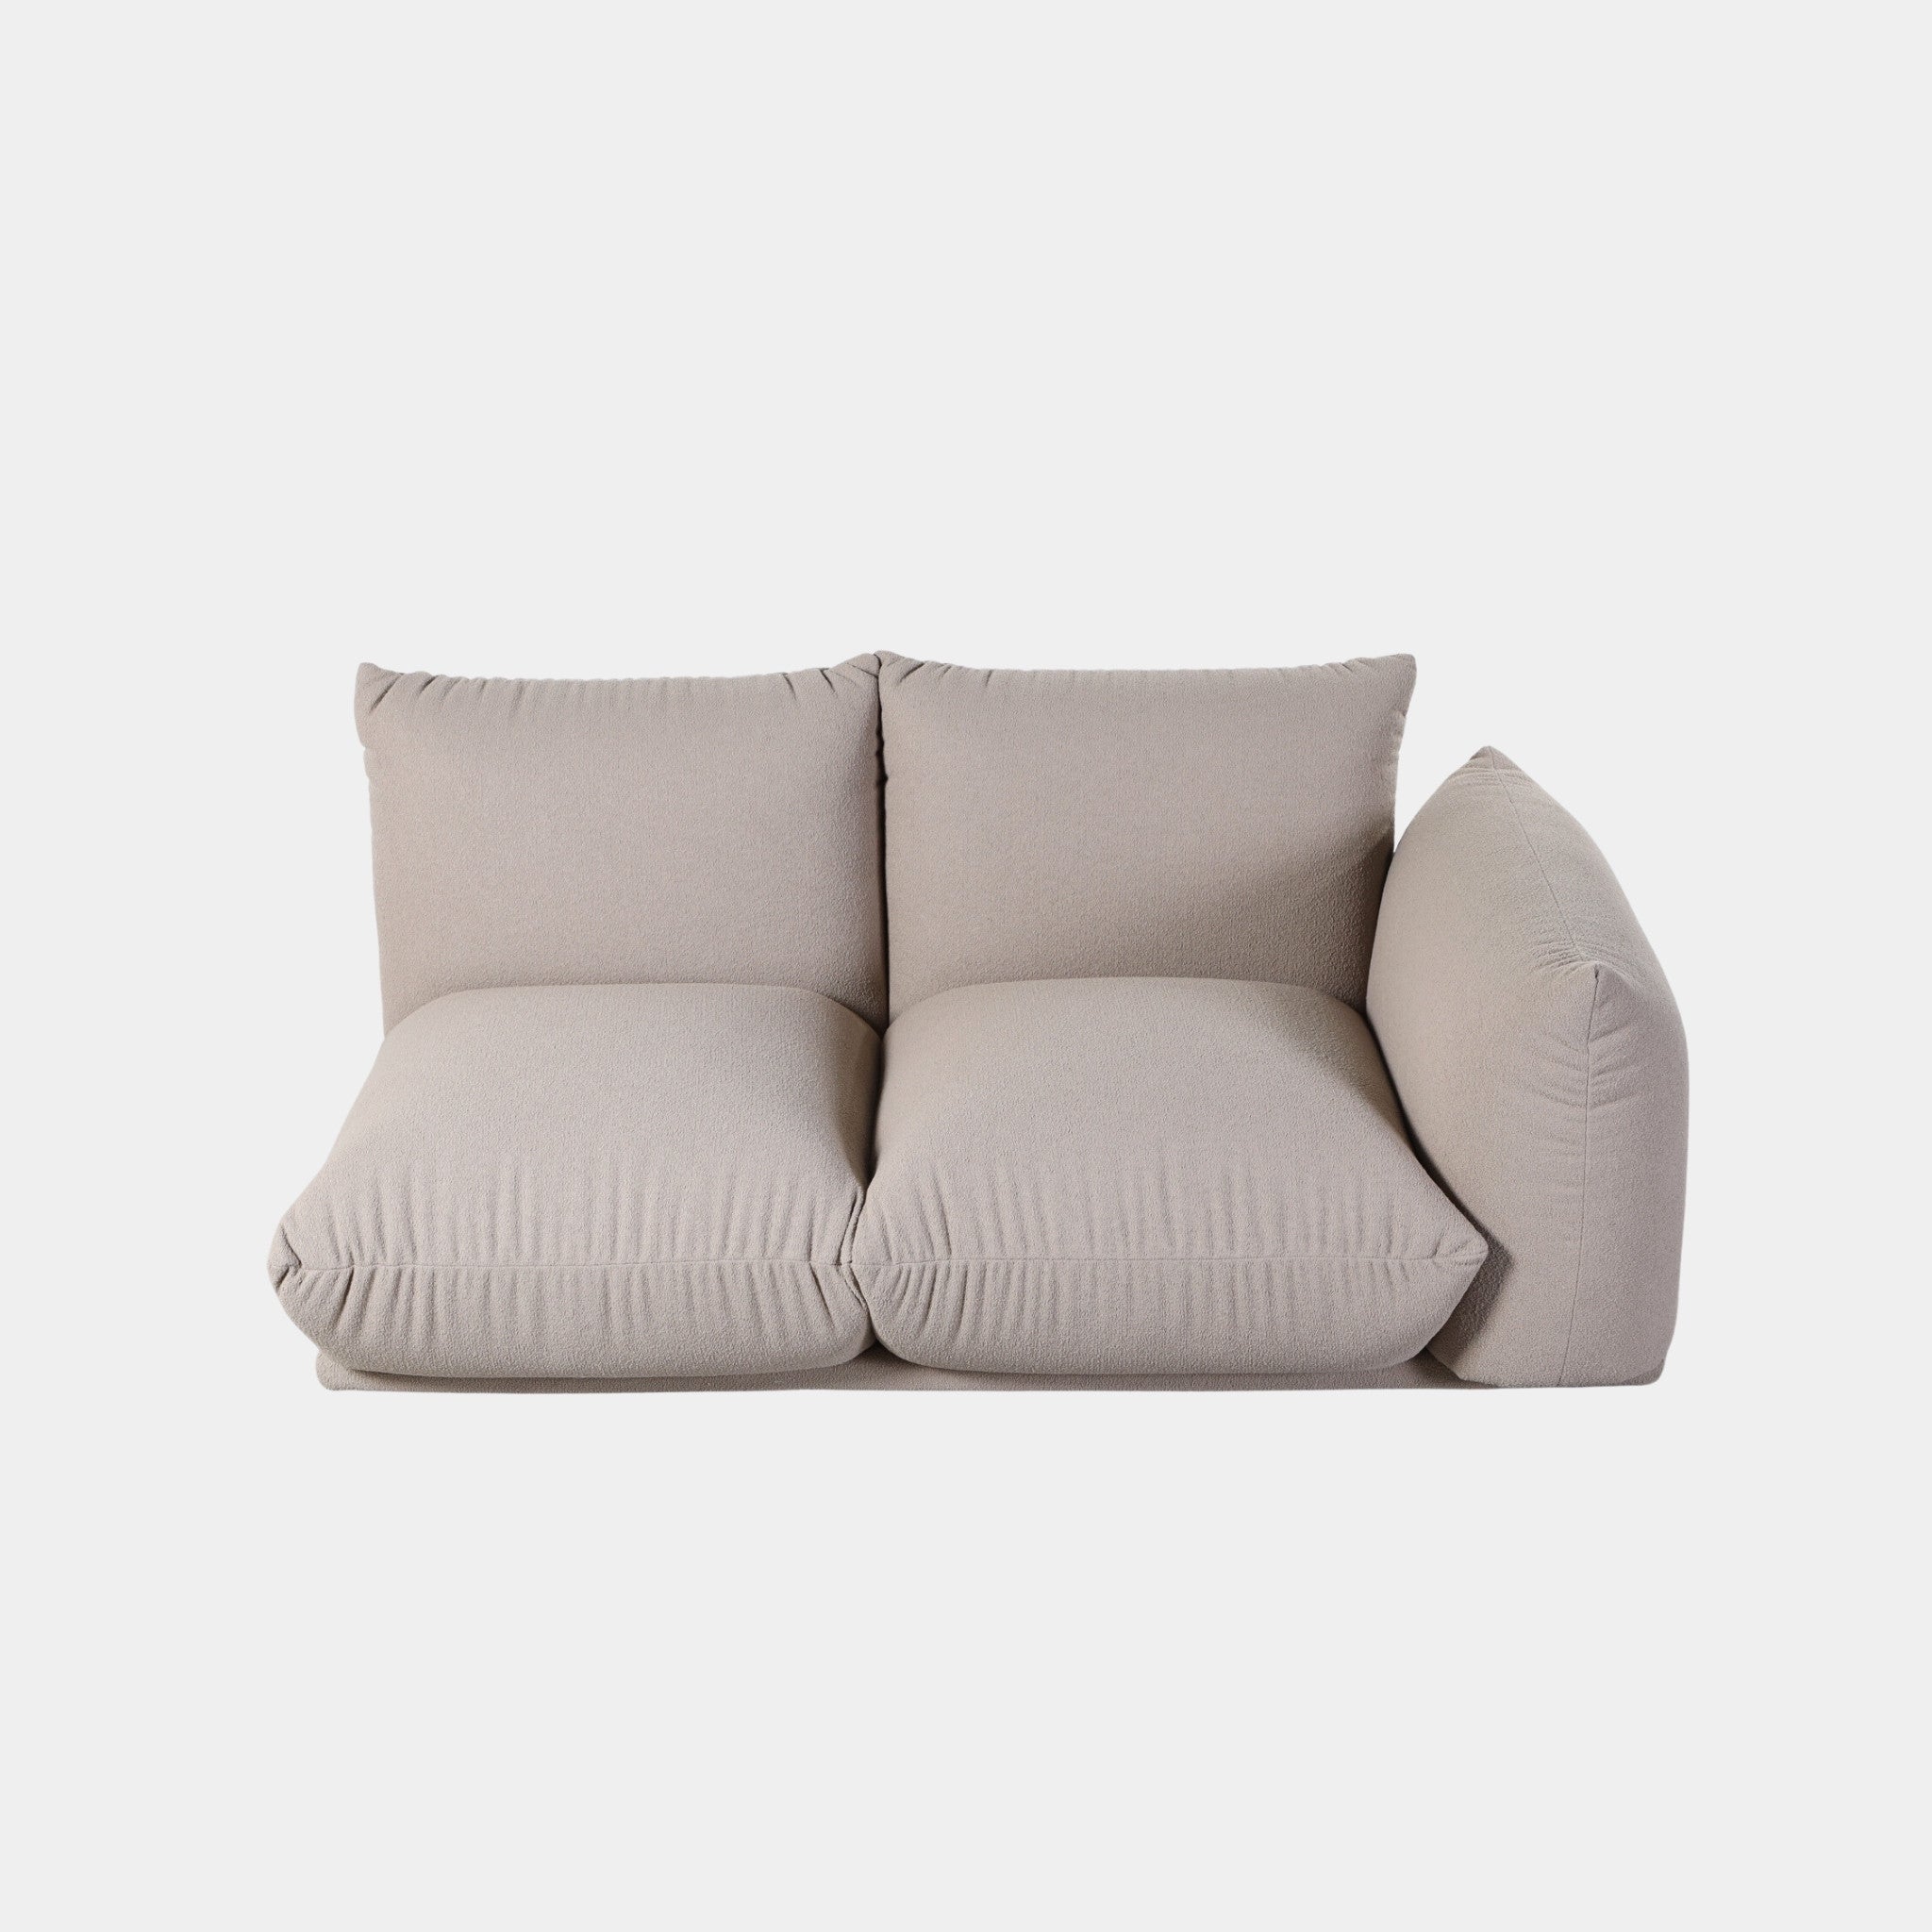 Loaf Modular Sofa